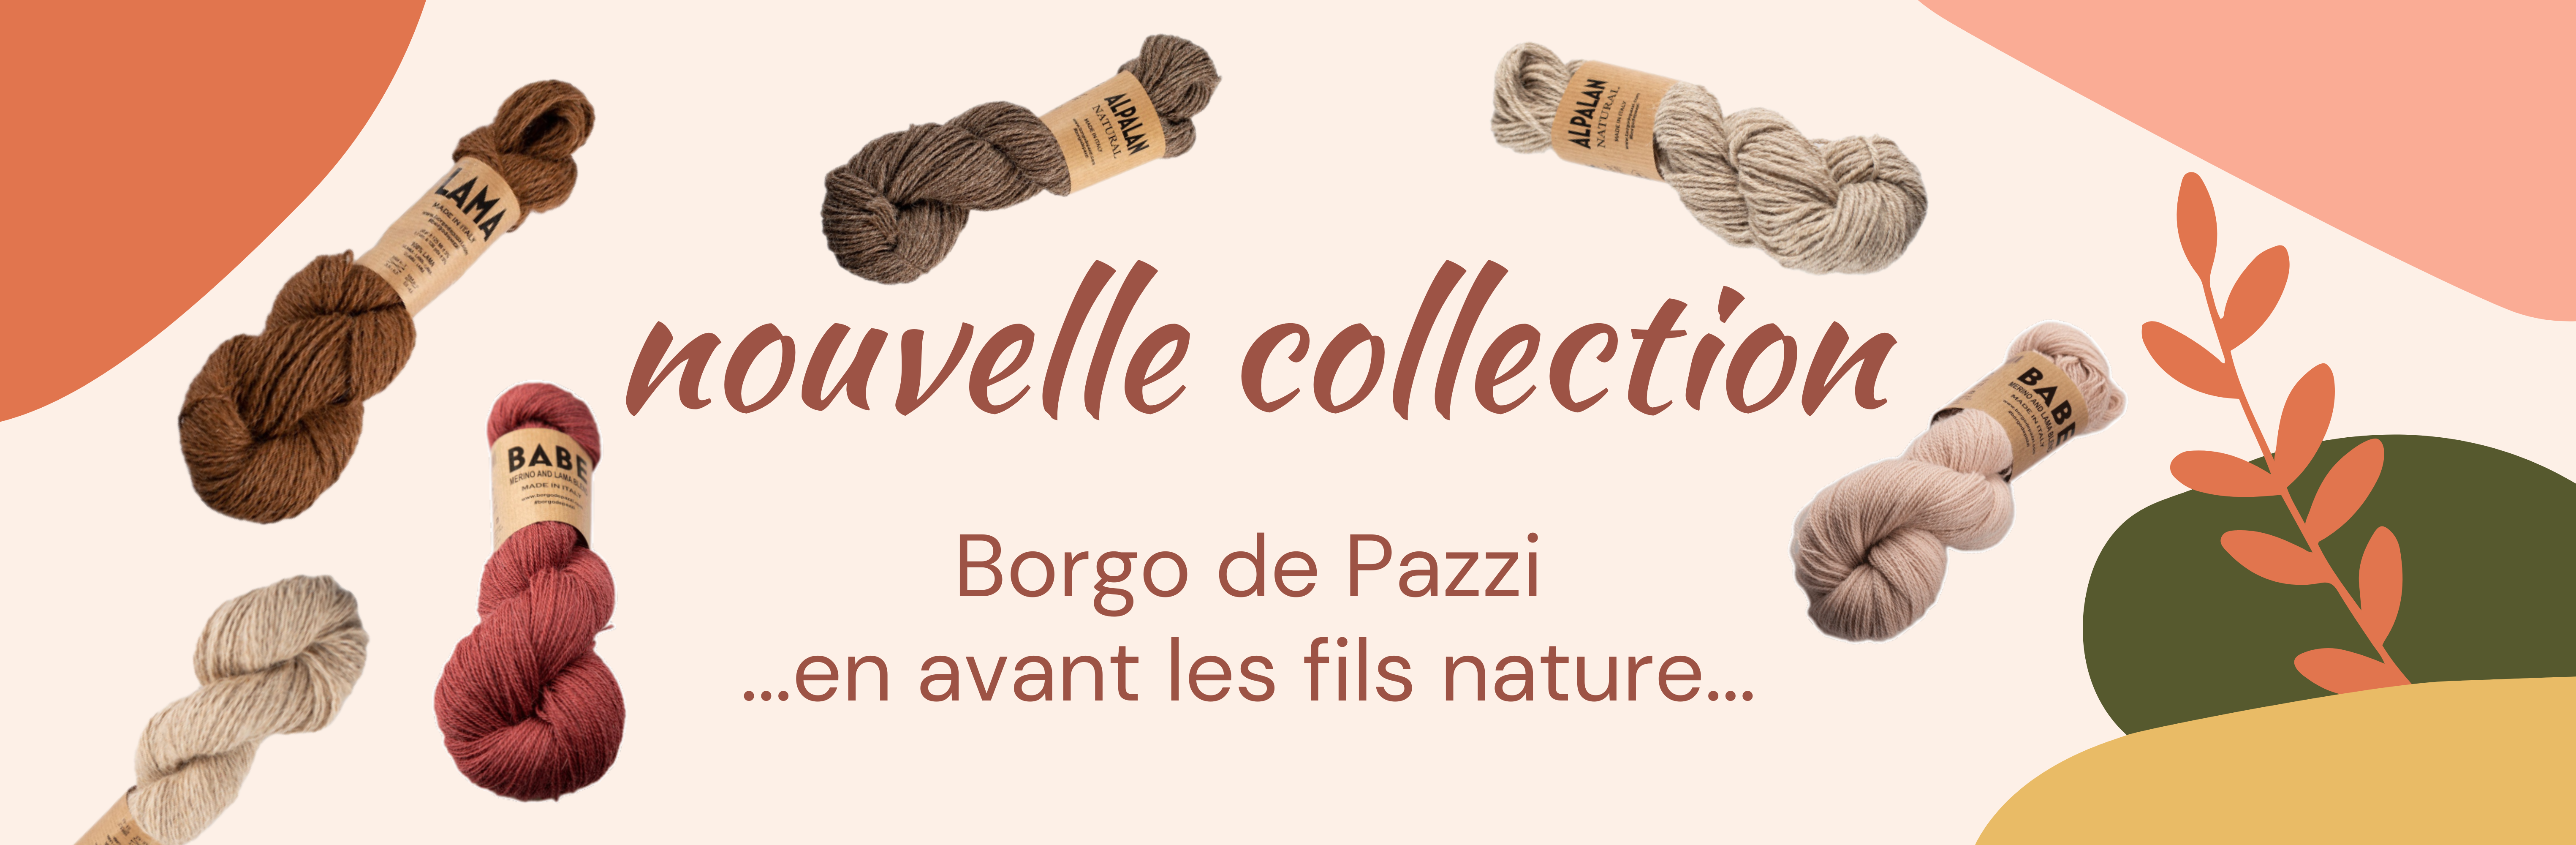 Borgo de Pazzi nouvelle collection